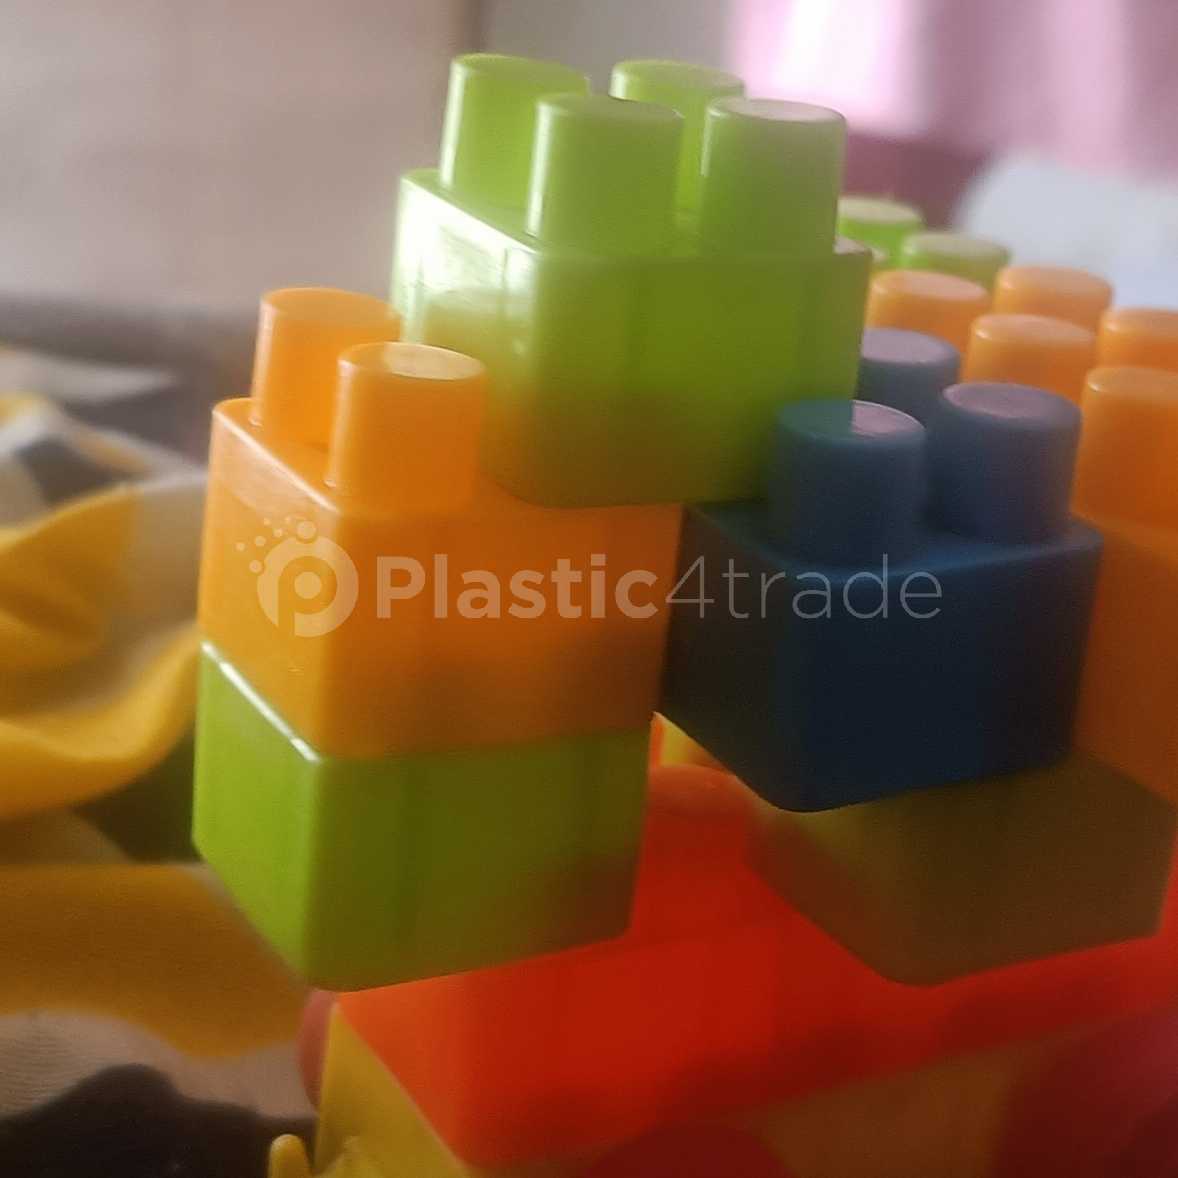 PUPR PP Rolls Film Grade maharashtra india Plastic4trade